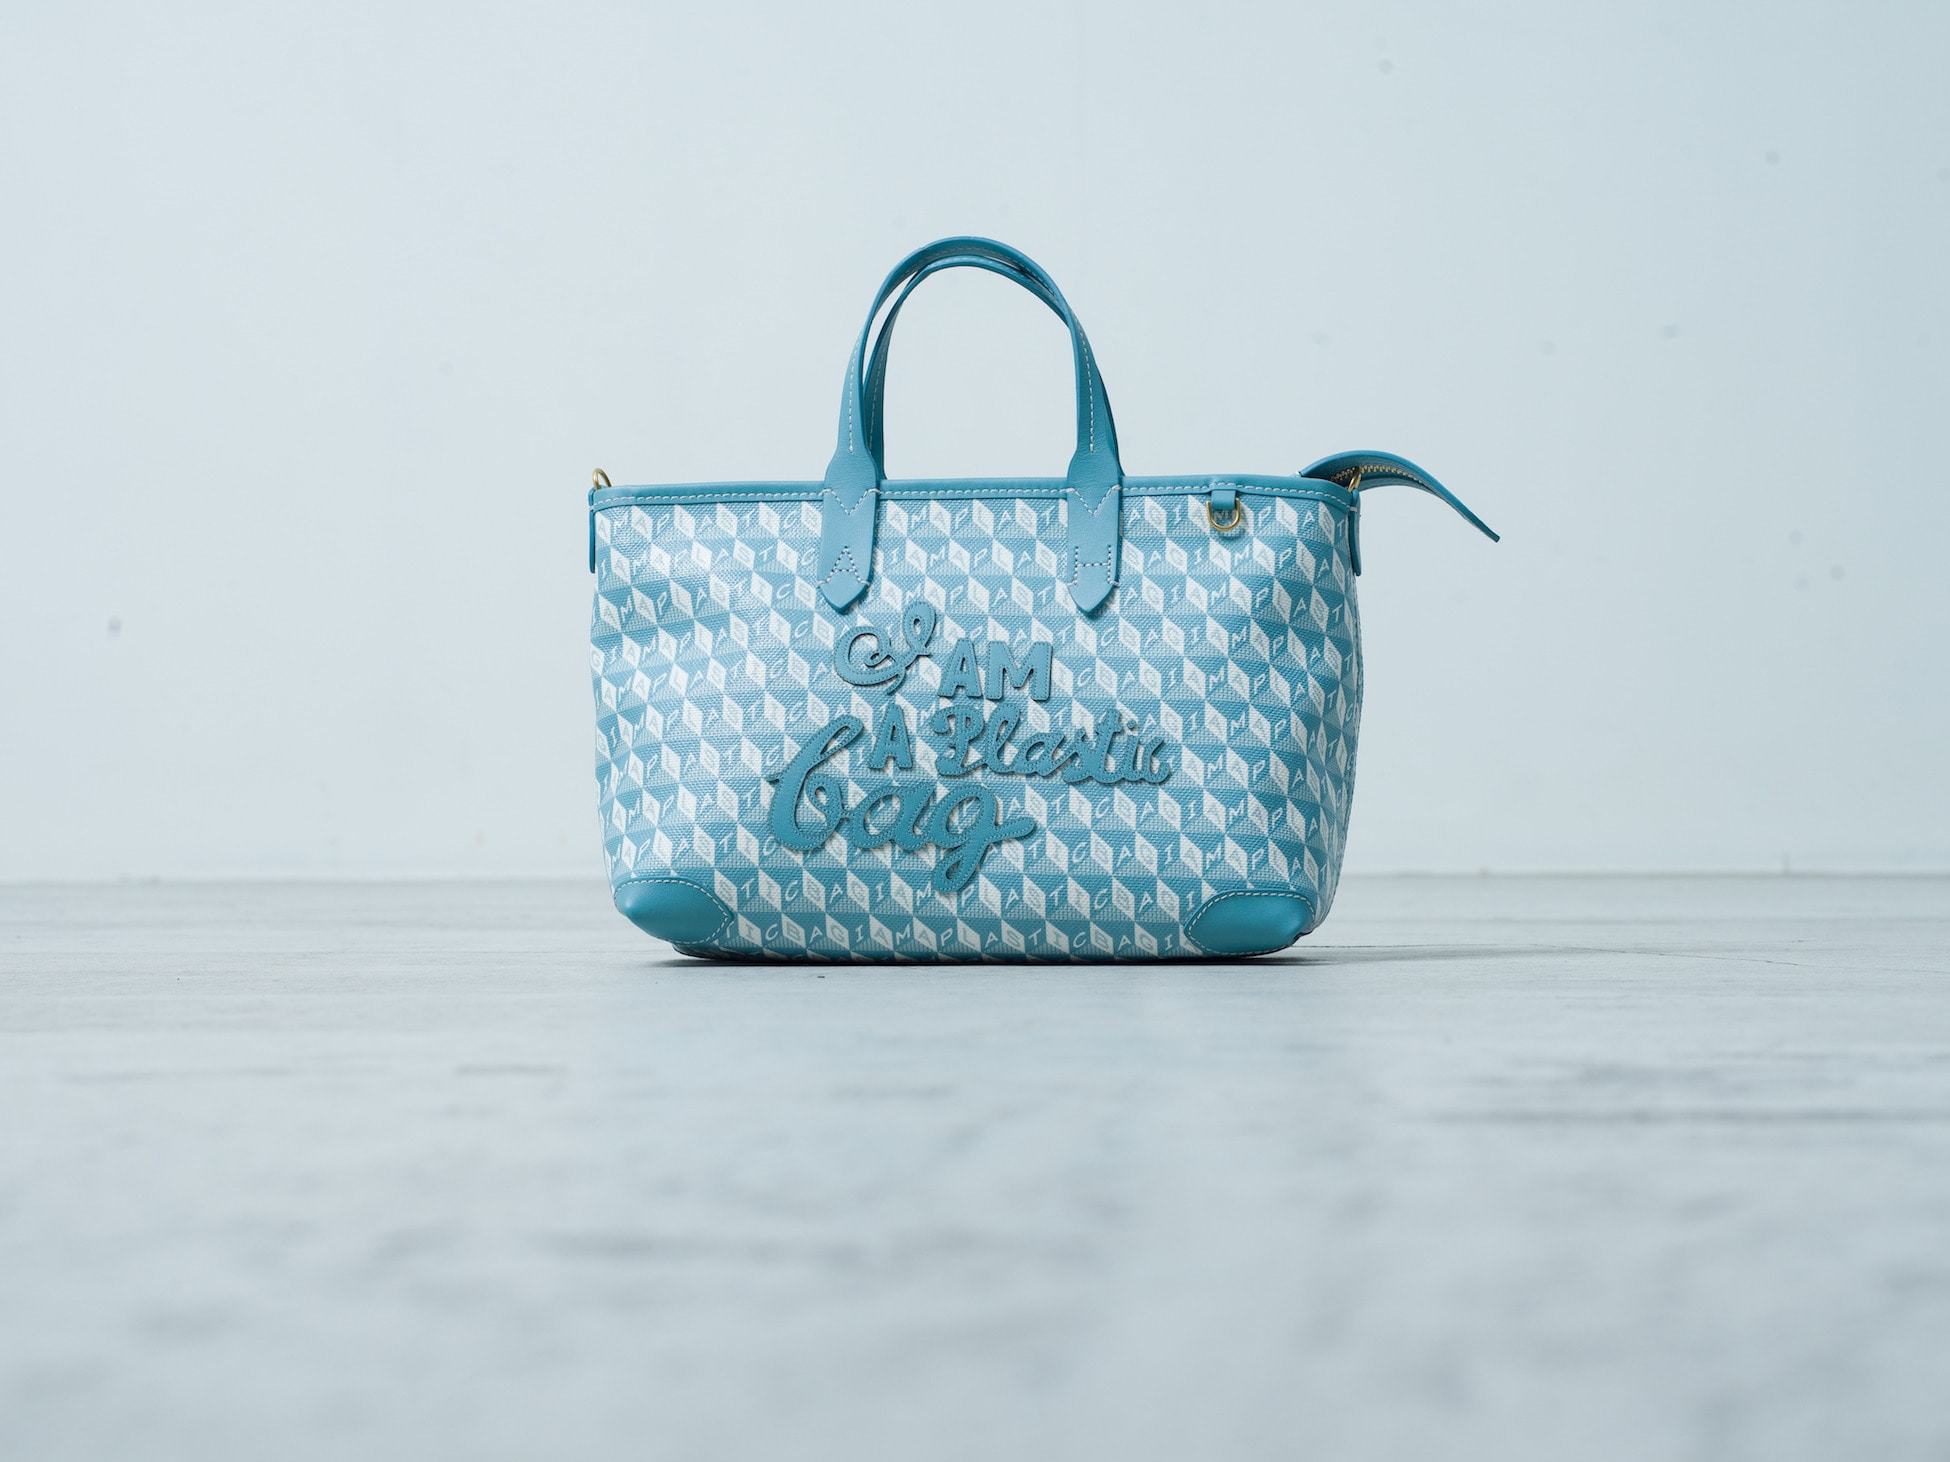 Anya Hindmarch “I AM A Plastic Bag” Limited New 